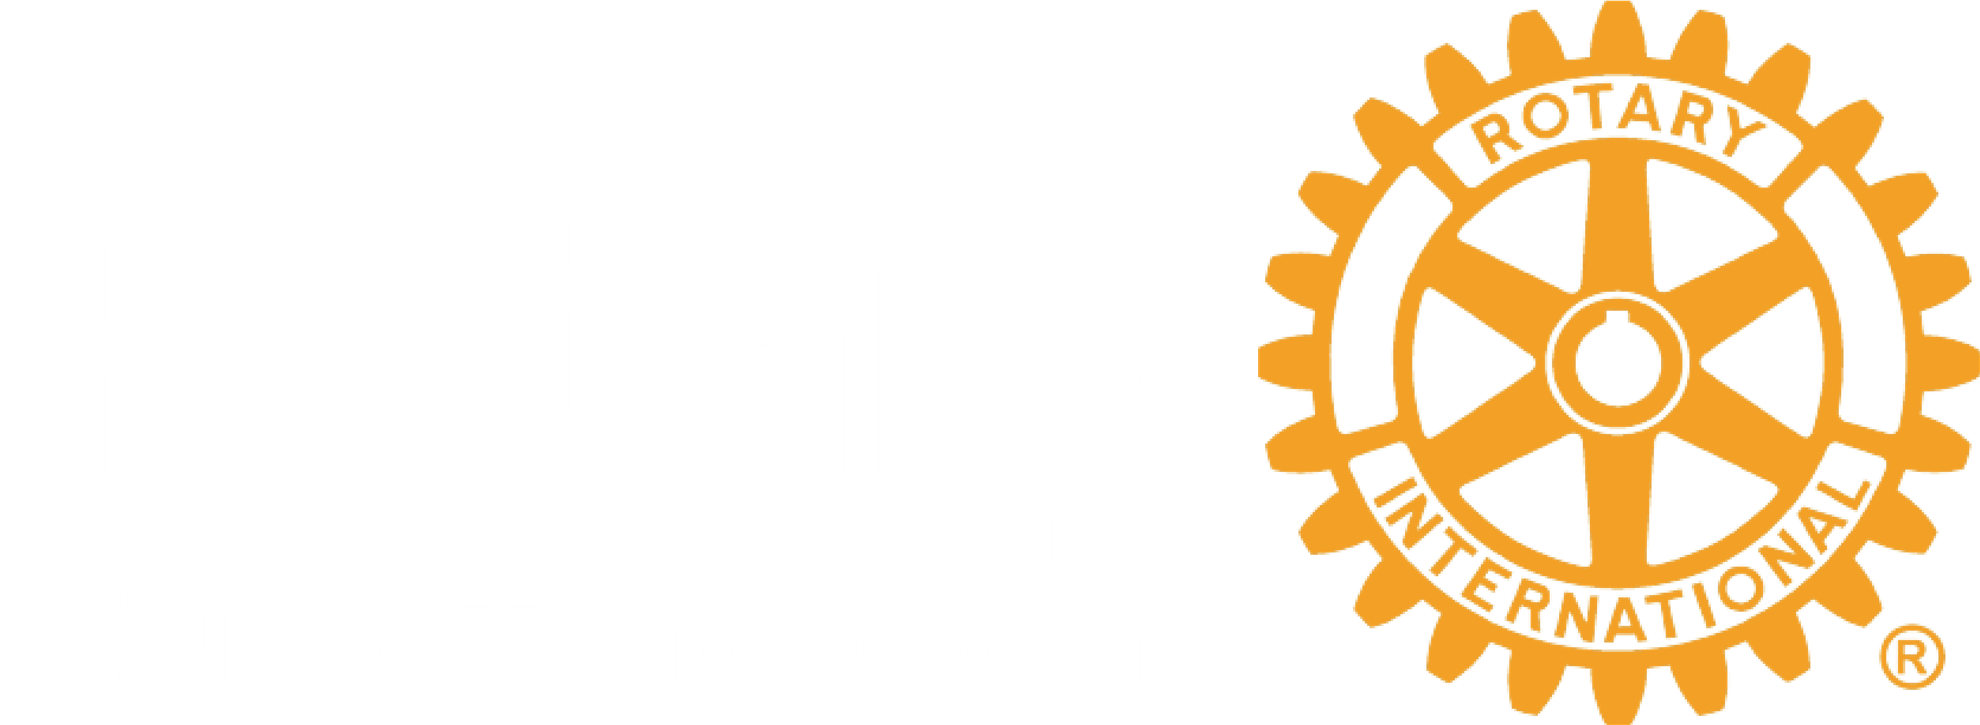 Rotary Club of Tahoe-Incline